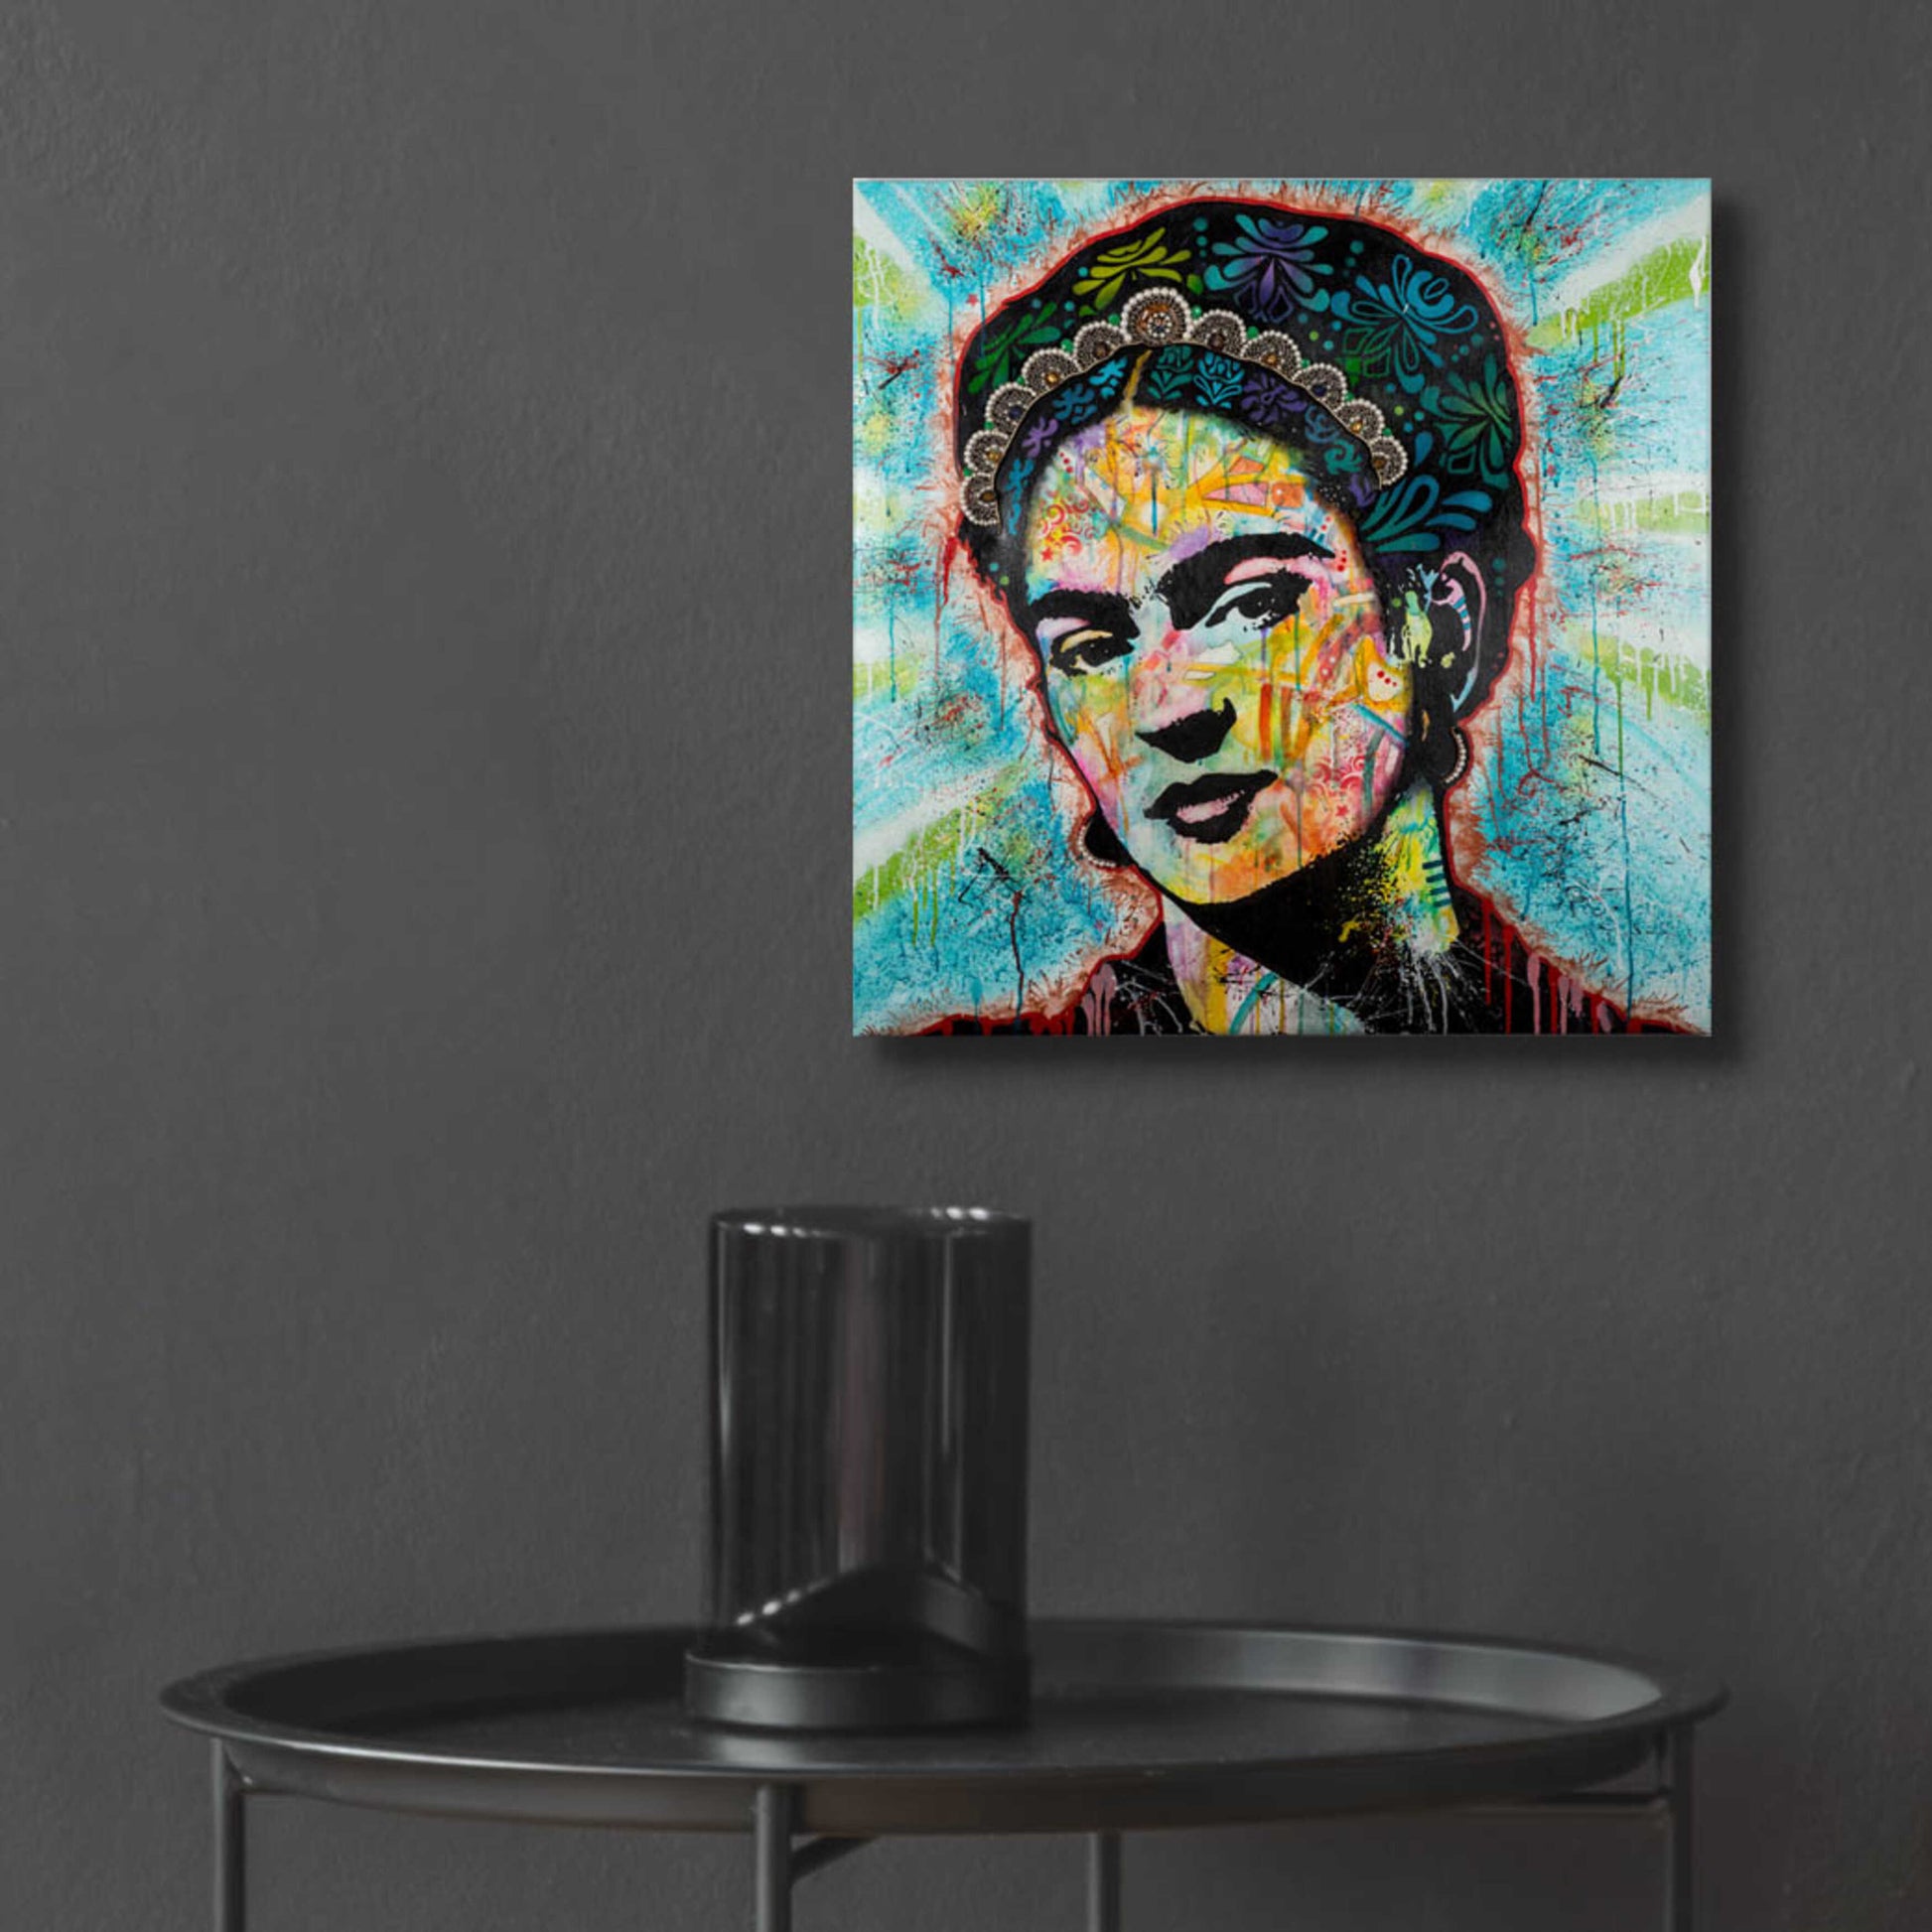 Epic Art 'Frida' by Dean Russo, Acrylic Glass Wall Art,12x12